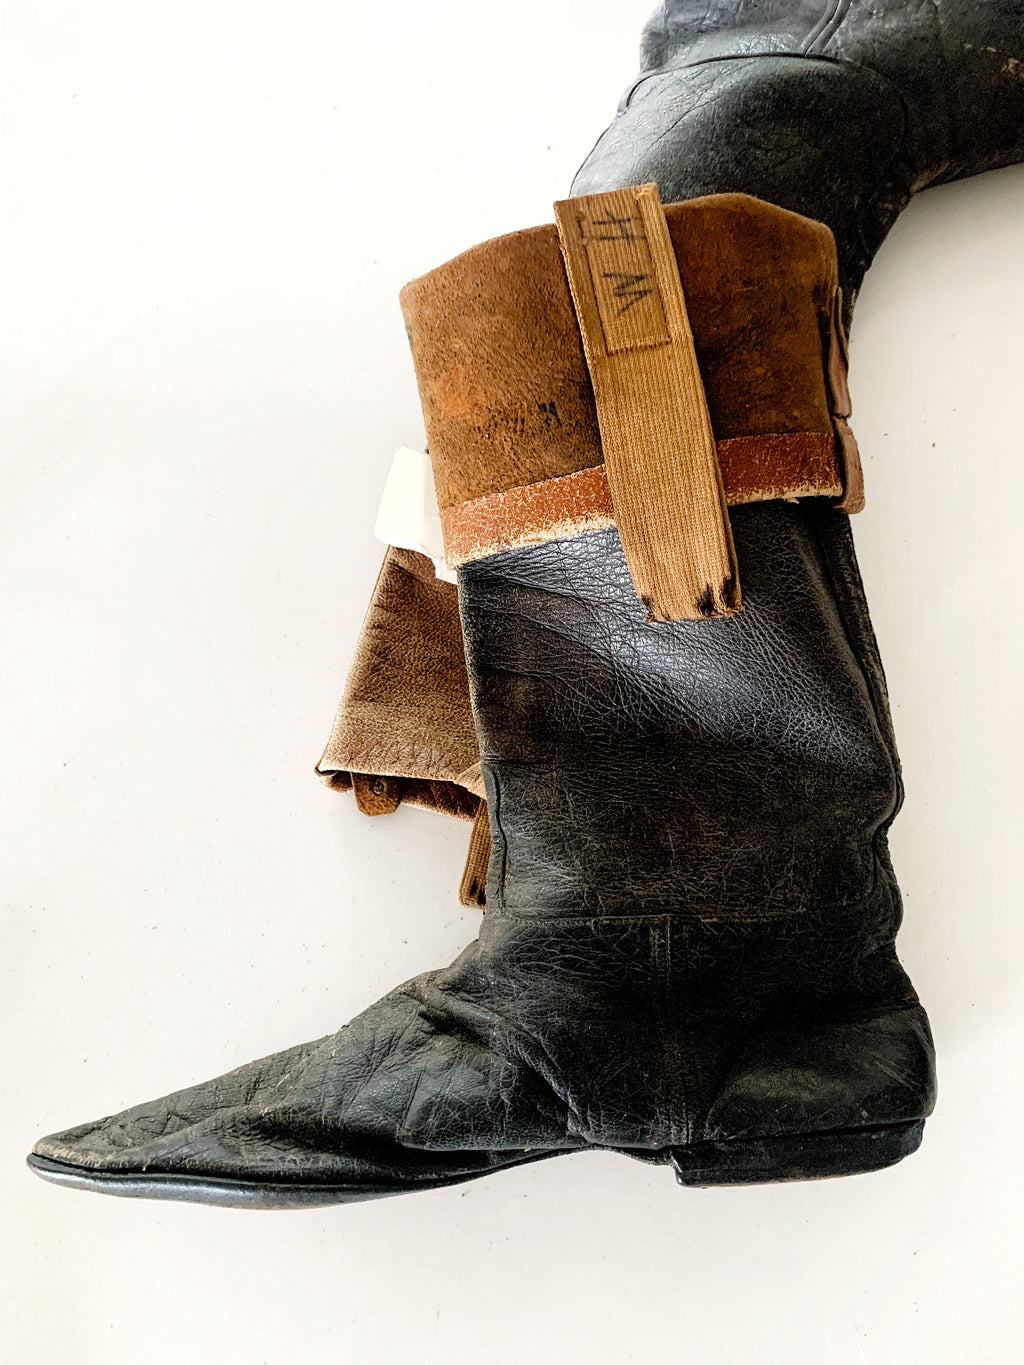 RARE Vintage Leather Jockey Racing Boots W H